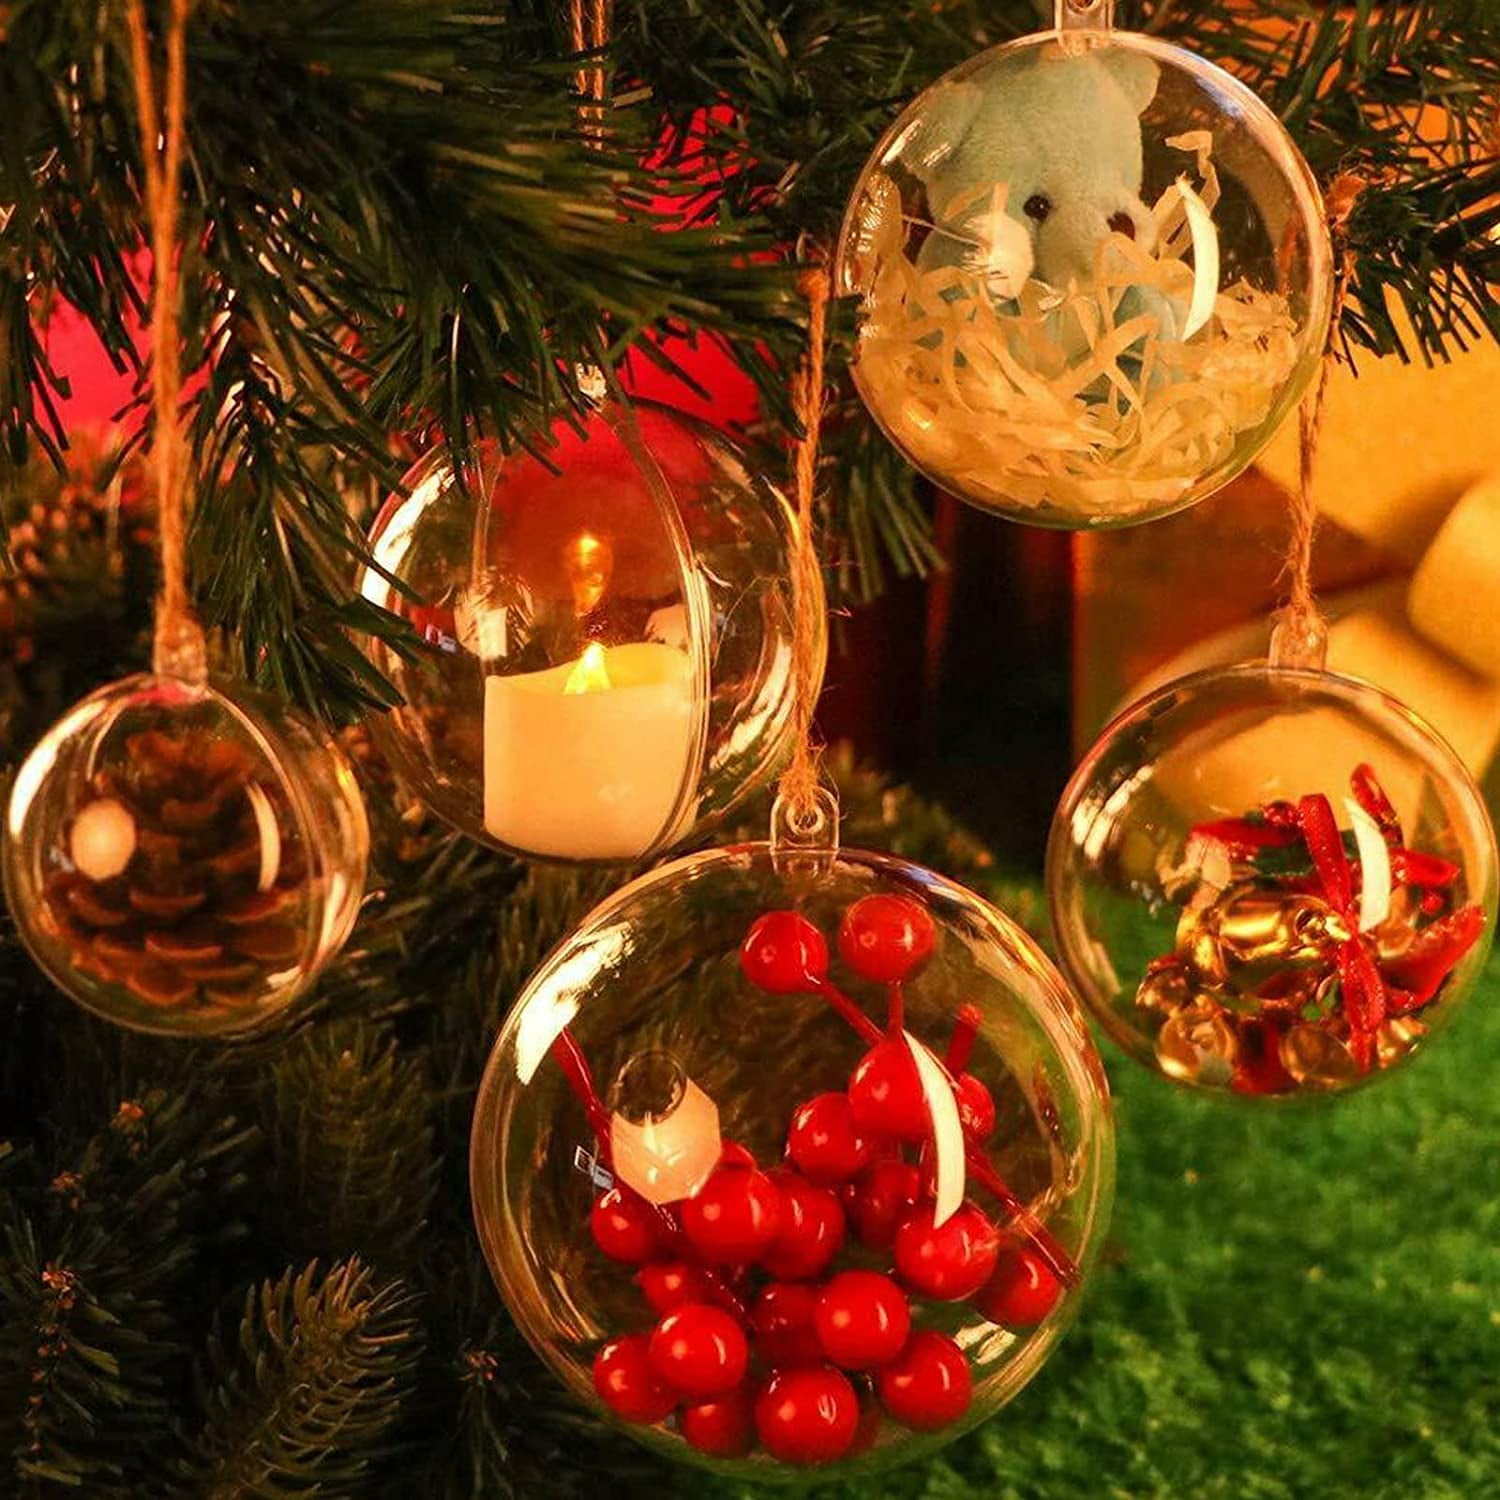 80mm Clear Plastic Fillable Ornament Ball - Exucase 3.15 20 Pack DIY Crafts Balls Kit Transparent Decor Ball- Handmade Decor for Christmas, Holiday